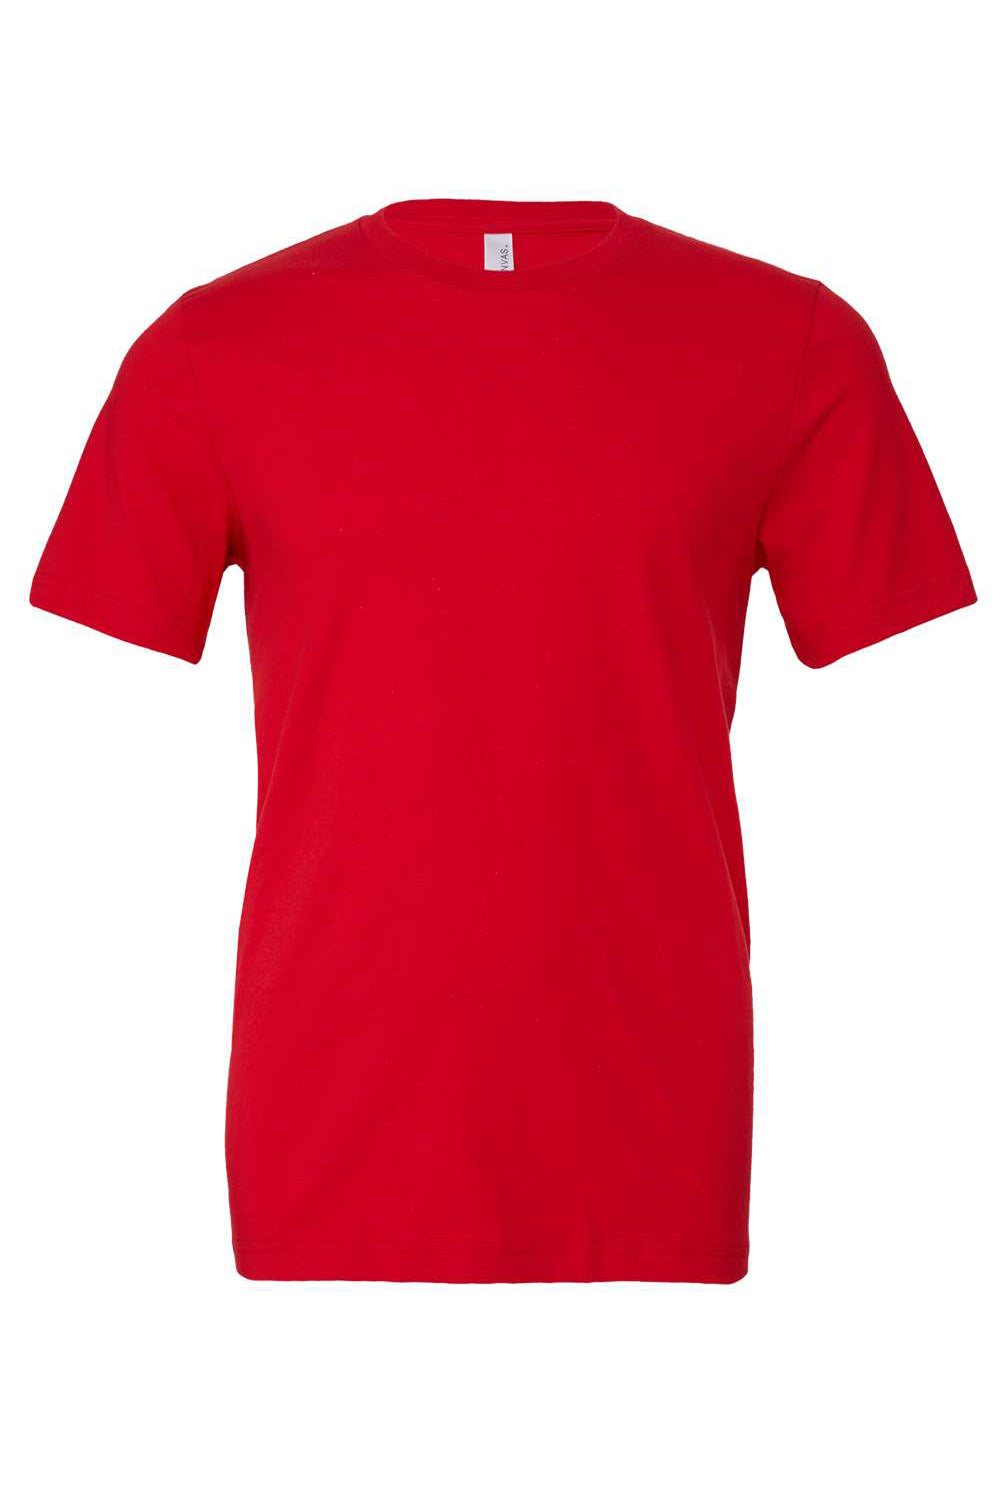 Bella + Canvas BC3001/3001C Mens Jersey Short Sleeve Crewneck T-Shirt Red Flat Front